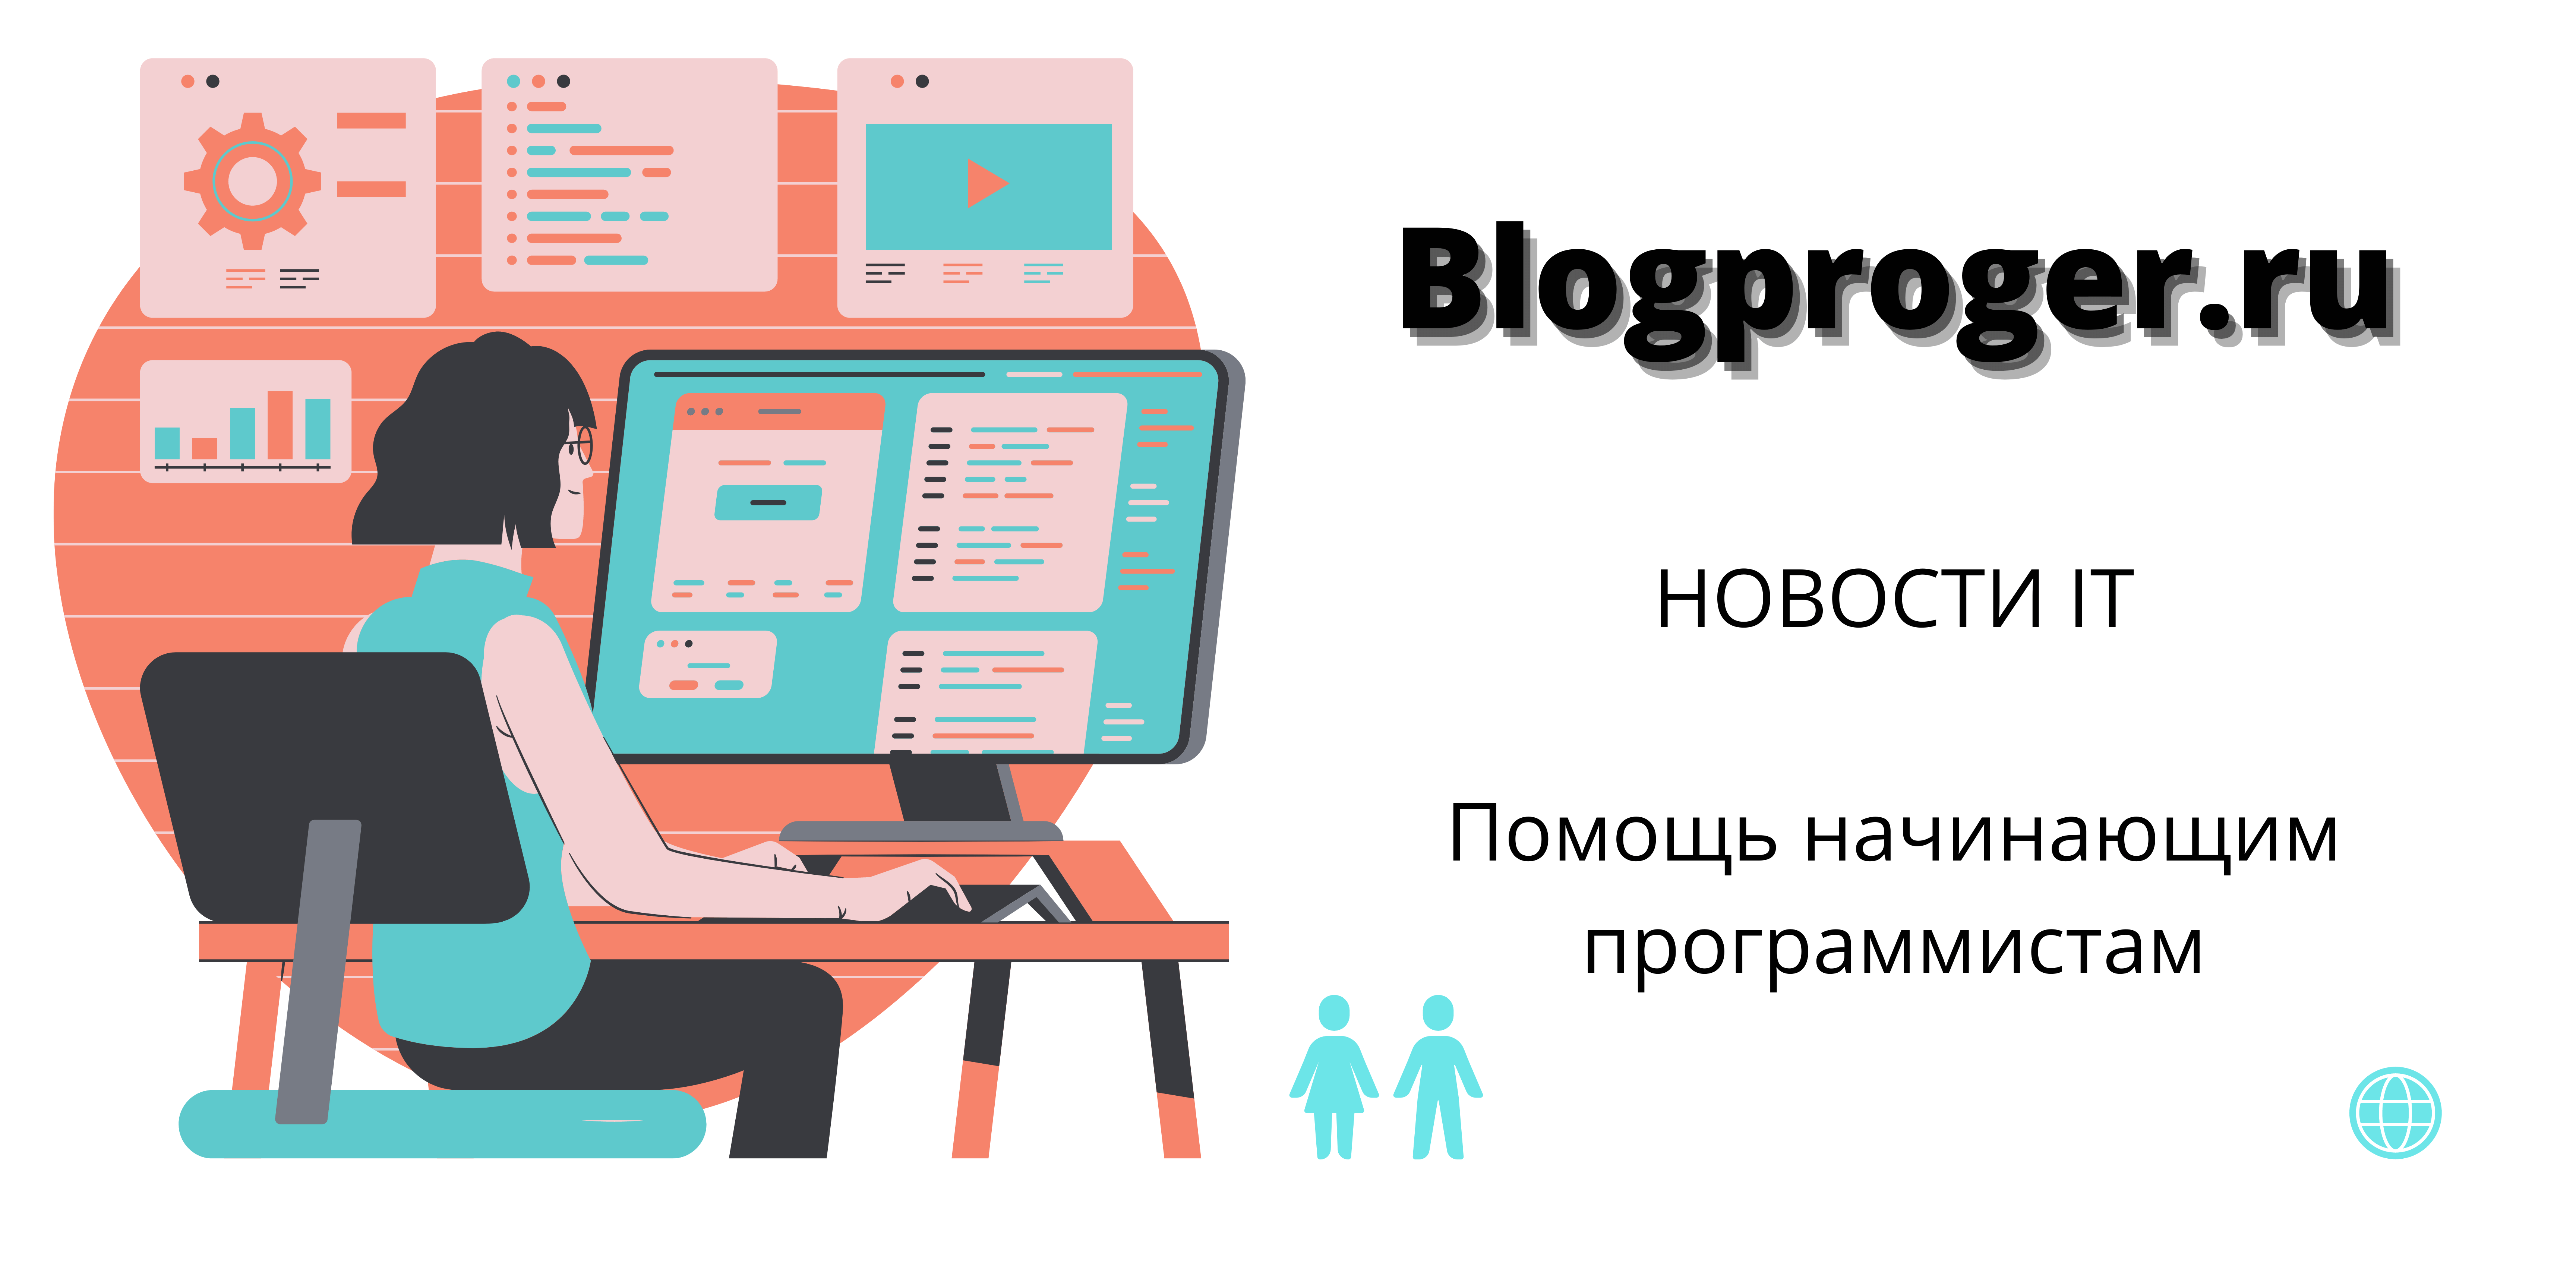 Сайт Blogproger.ru